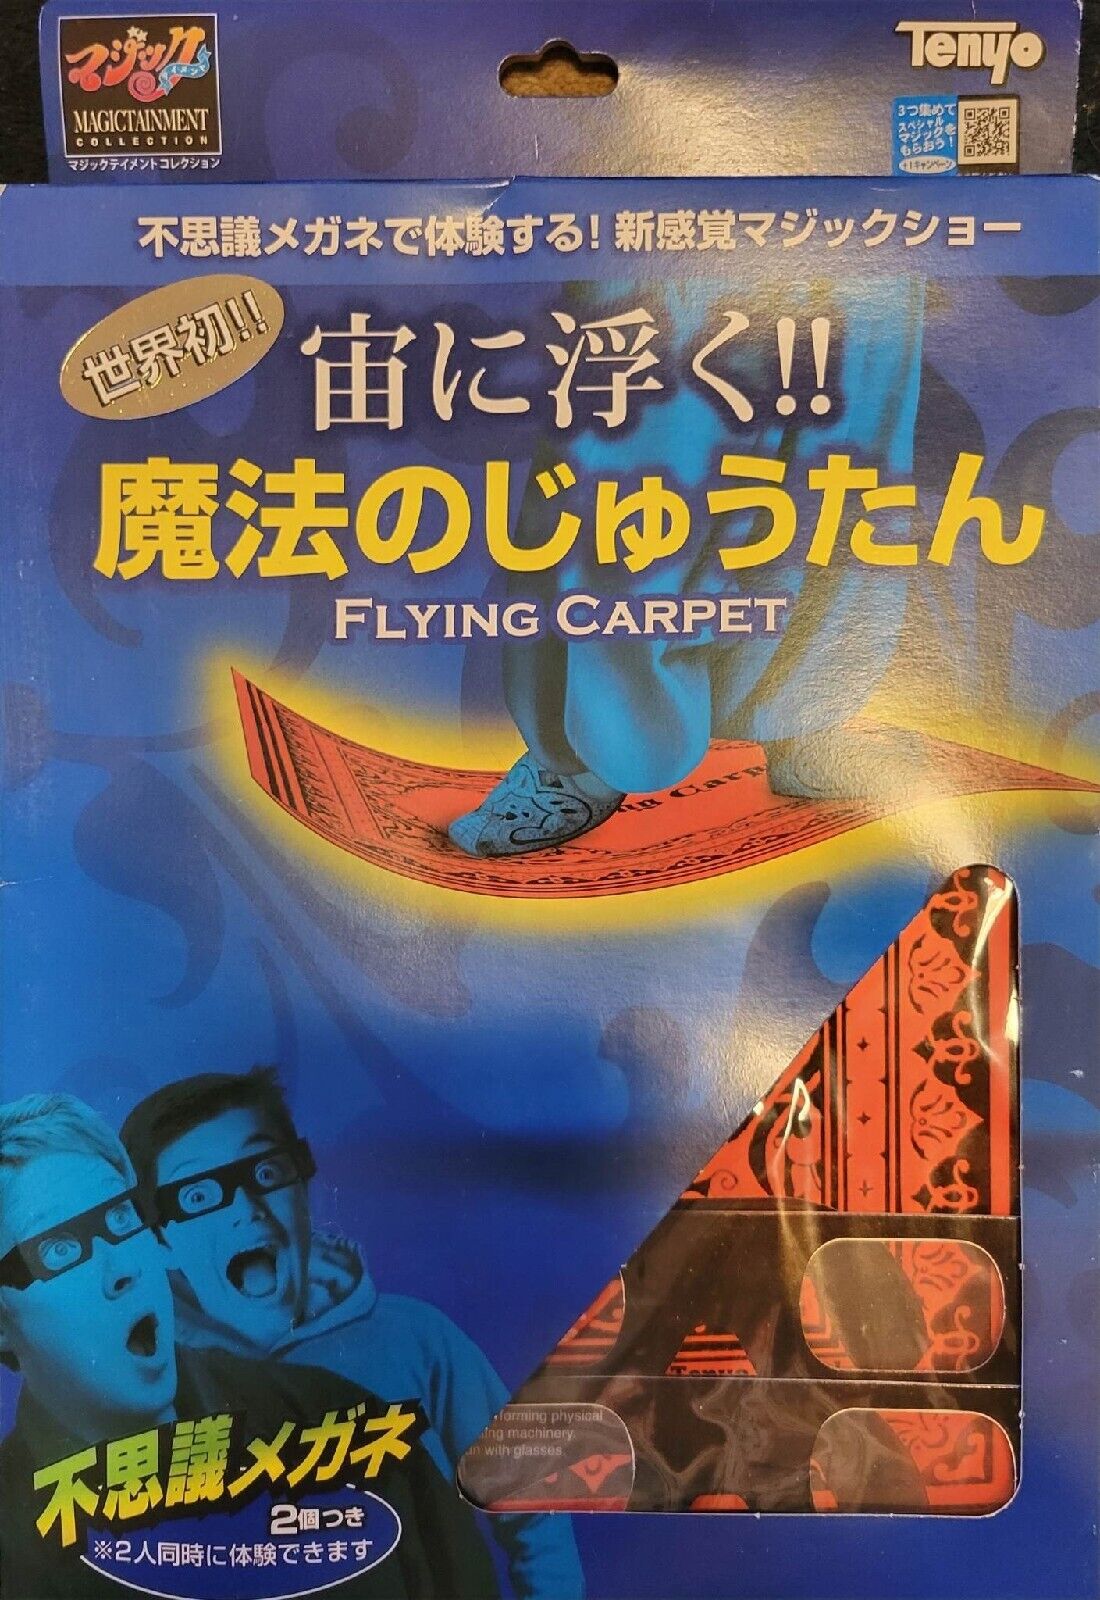 Tenyo Magic 115985 Flying Carpet